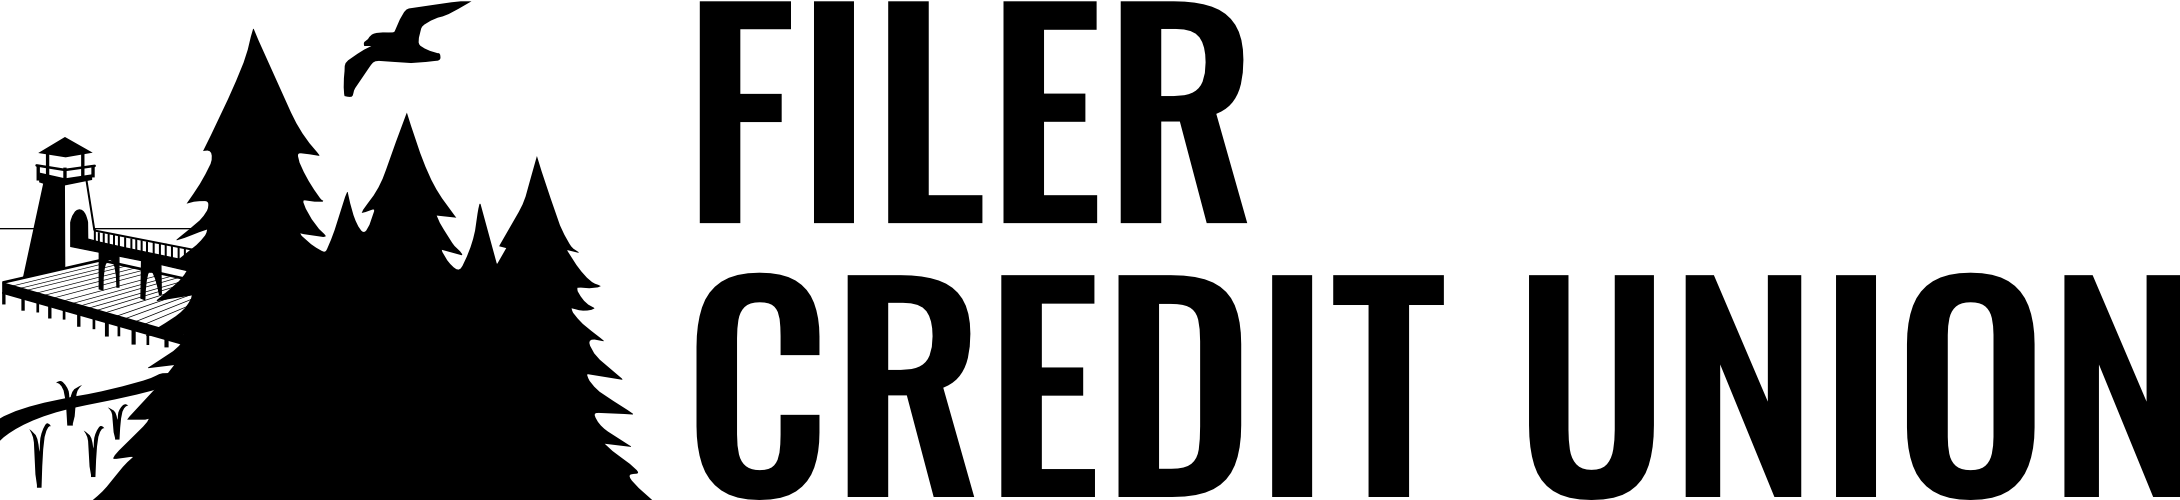 Filer Credit Union Logo